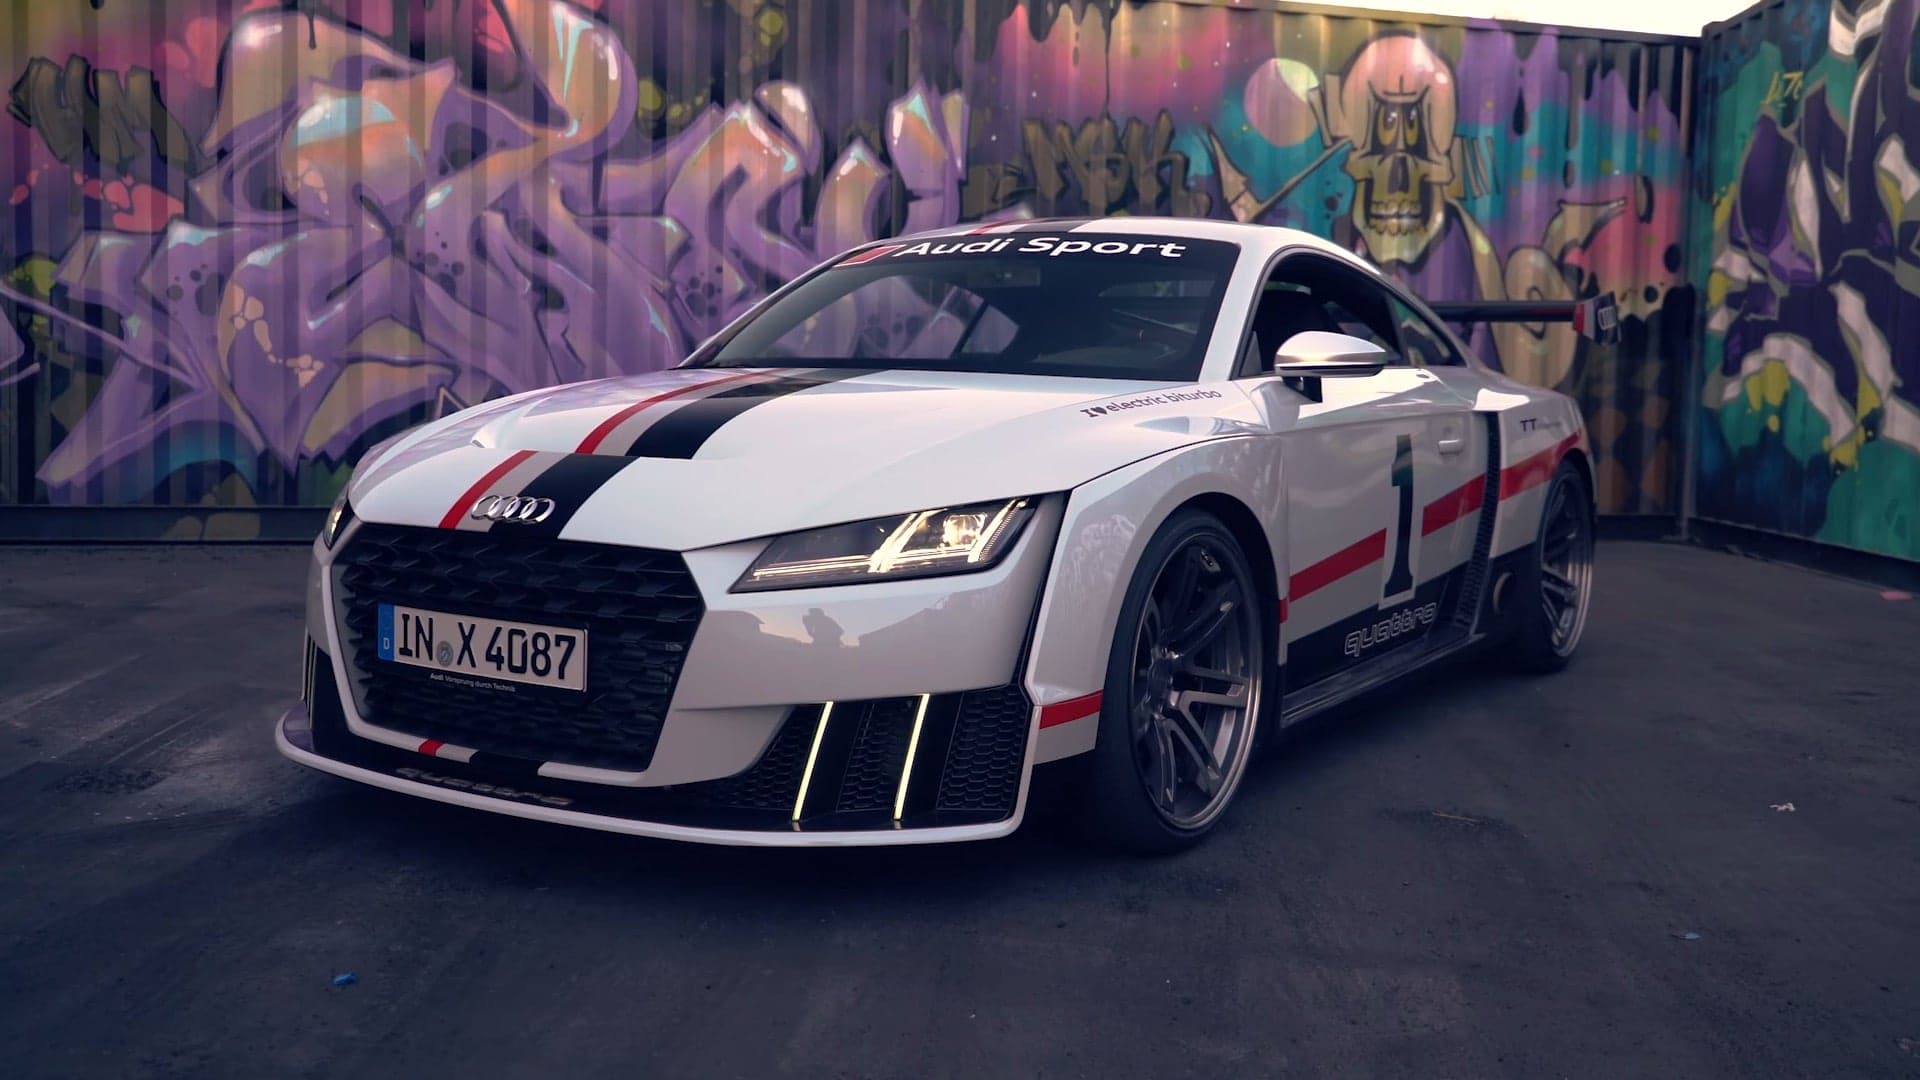 The 600-Horsepower Audi TT Clubsport Turbo Concept visits the Hoonigan Garage